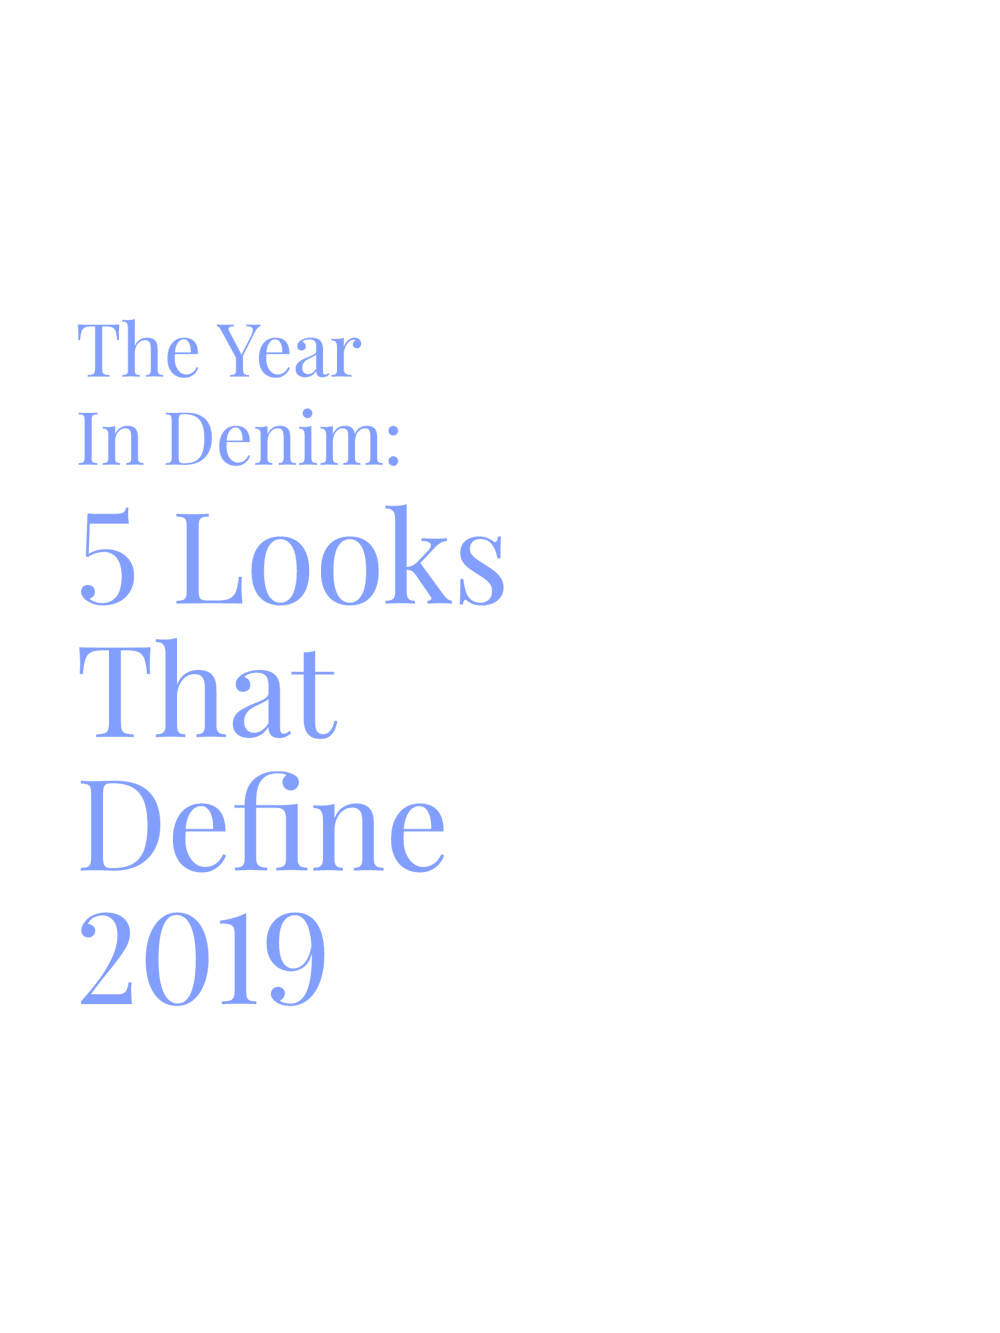 The Year in Denim: 5 Looks That Define 2019